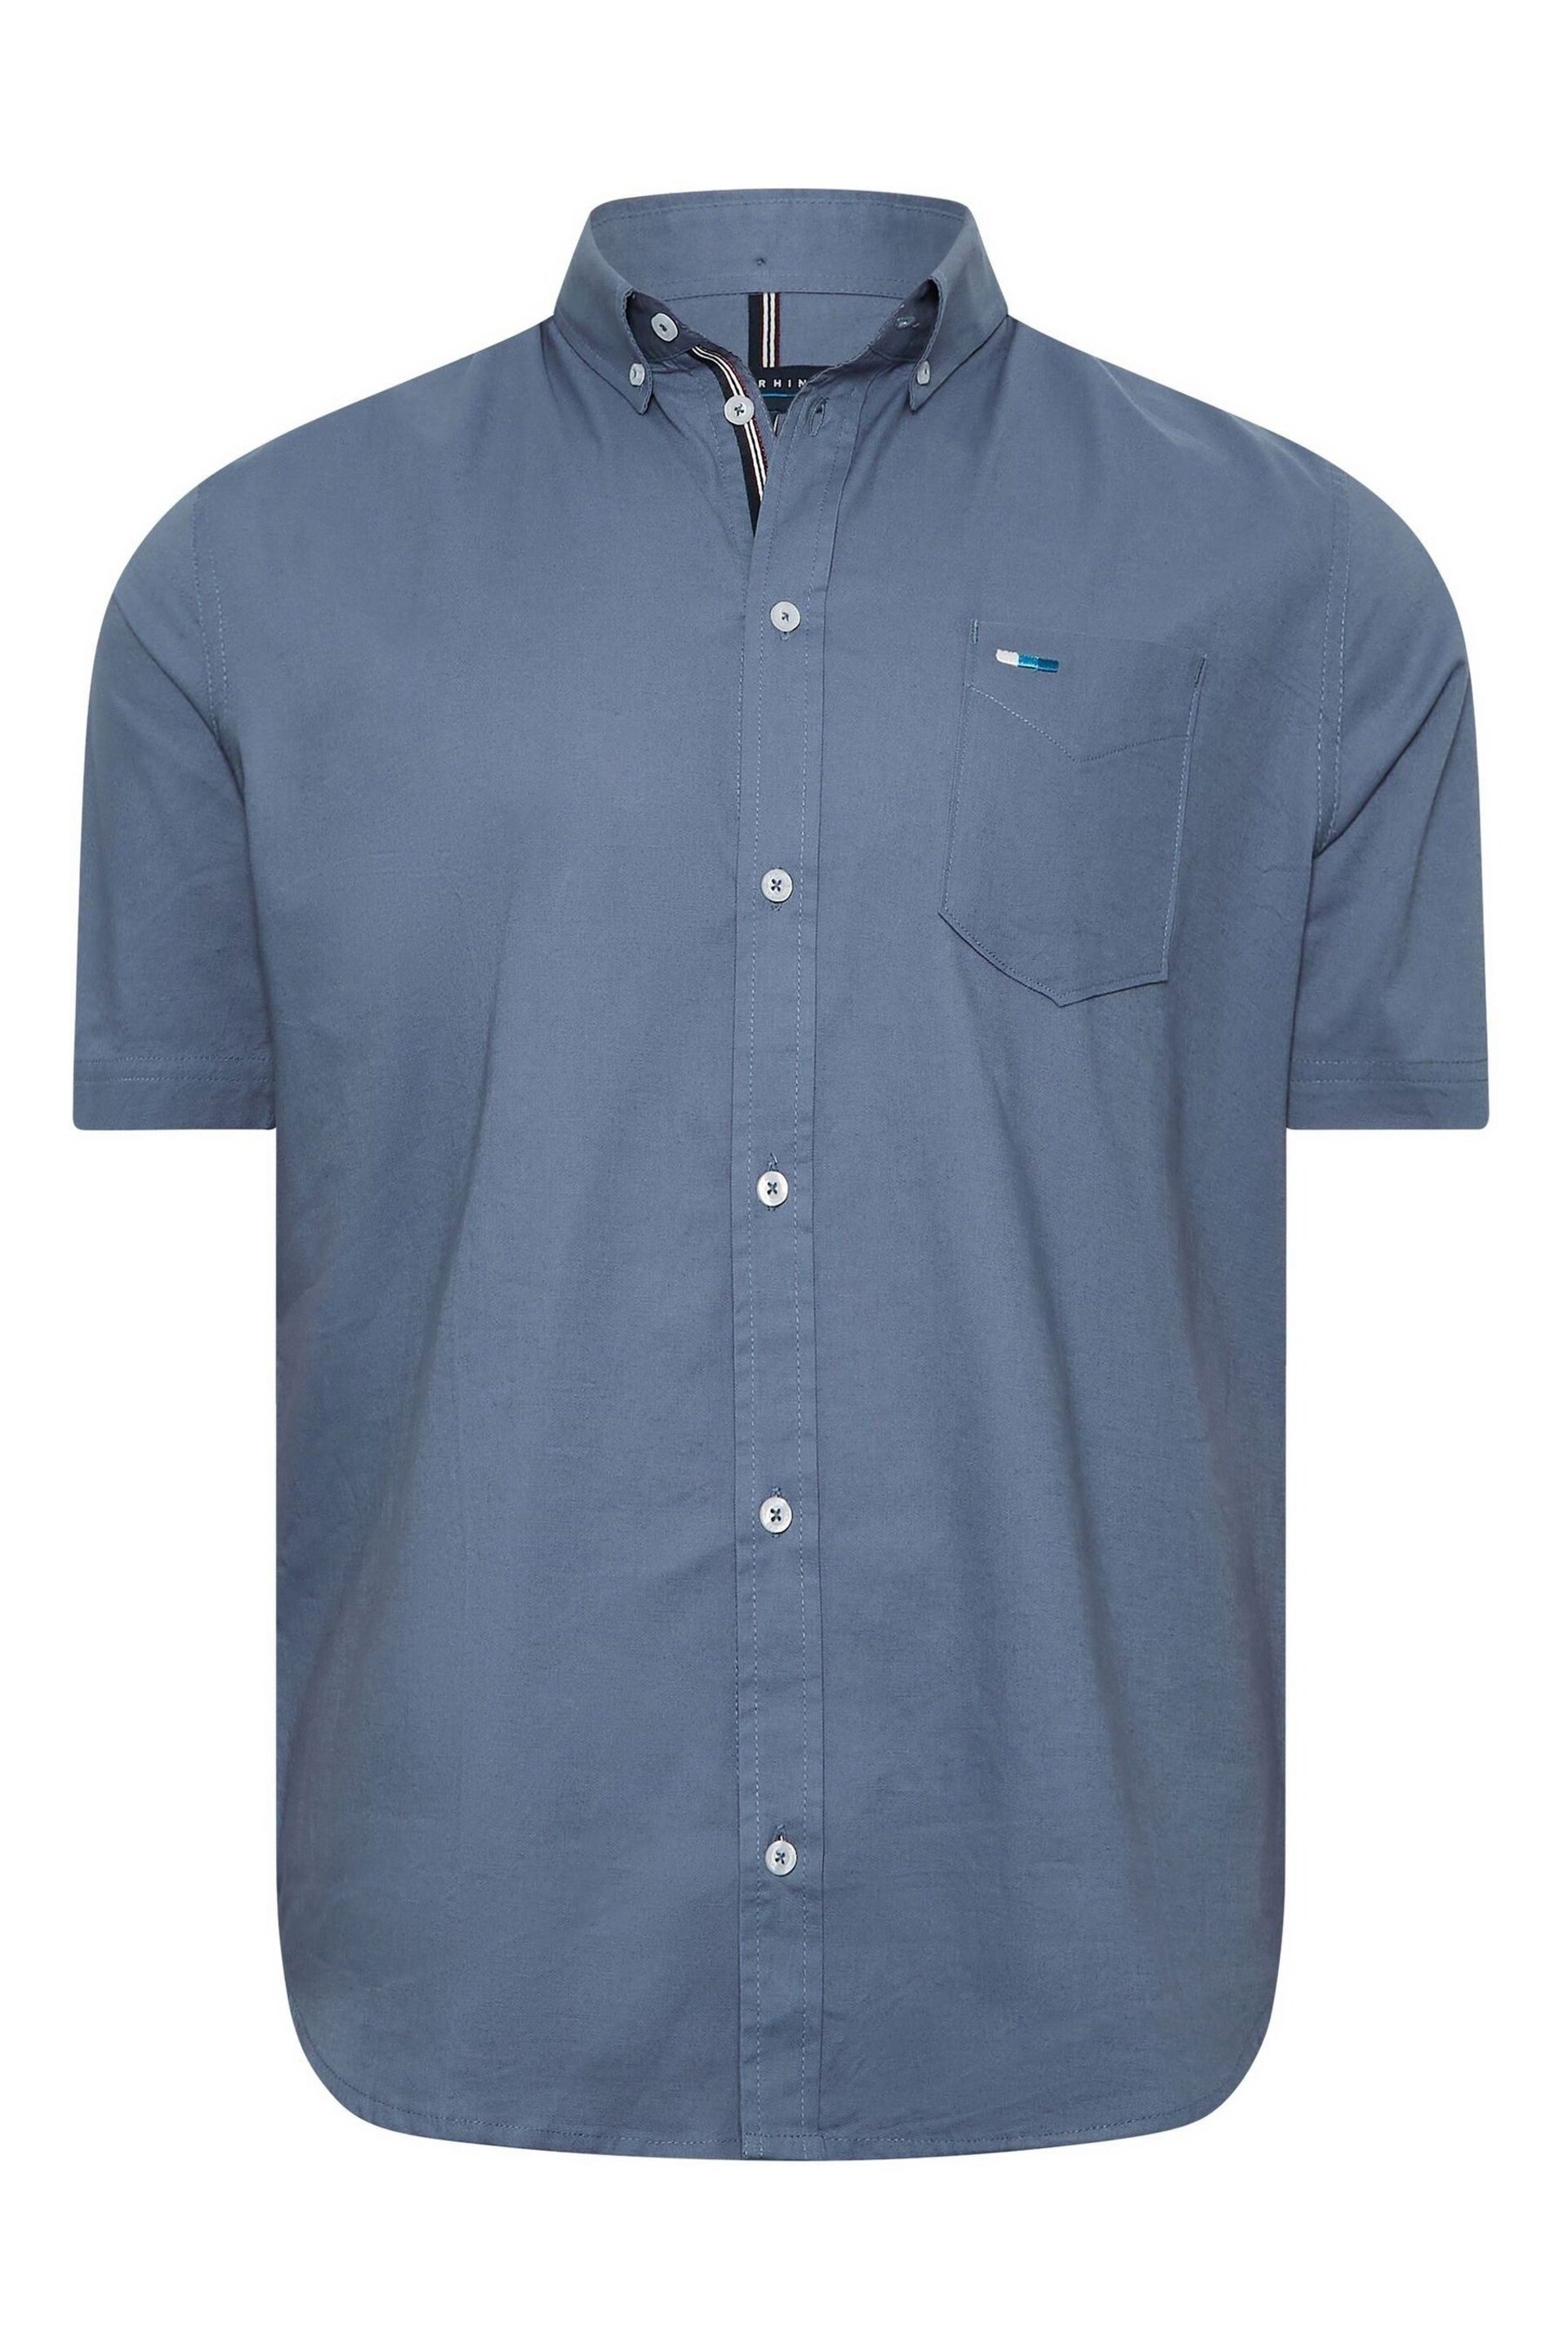 BadRhino Big & Tall Blue Short Sleeve Oxford Shirt - Image 2 of 3